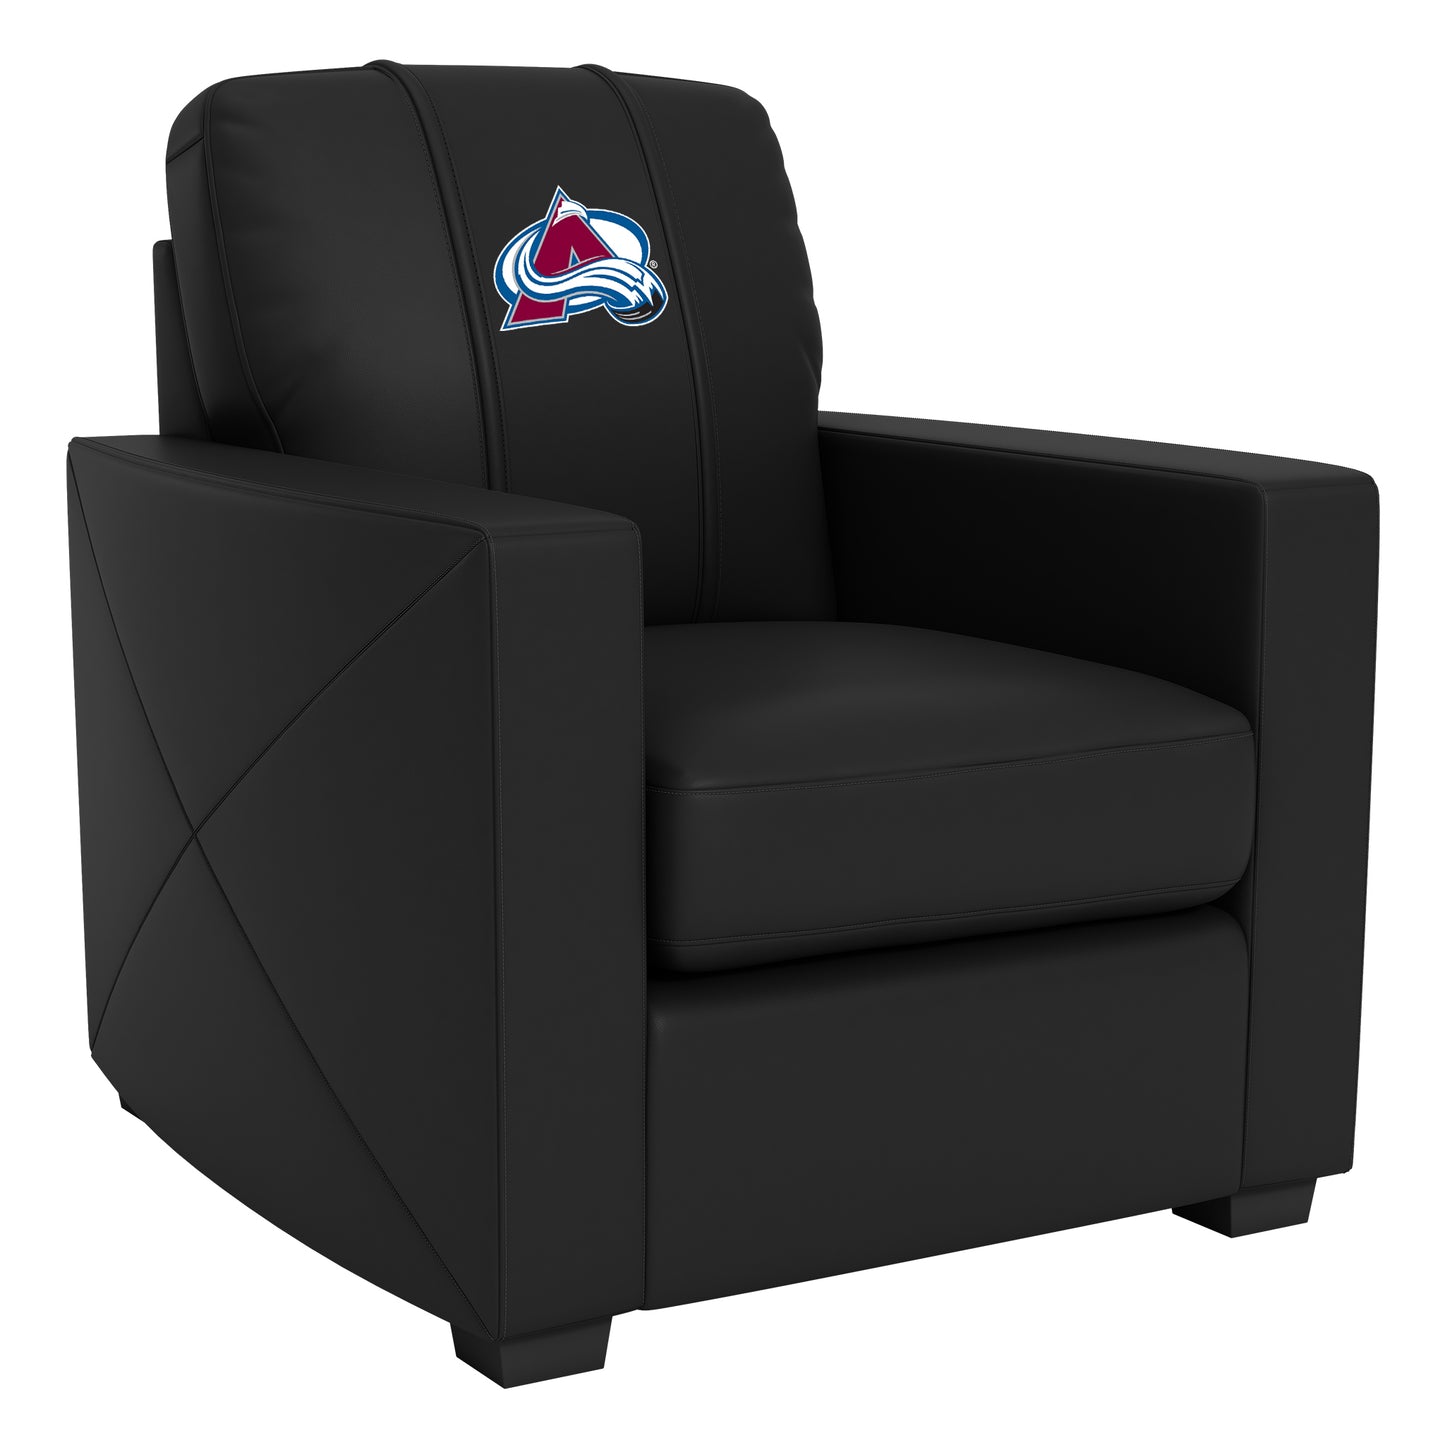 Silver Club Chair with Colorado Avalanche Logo